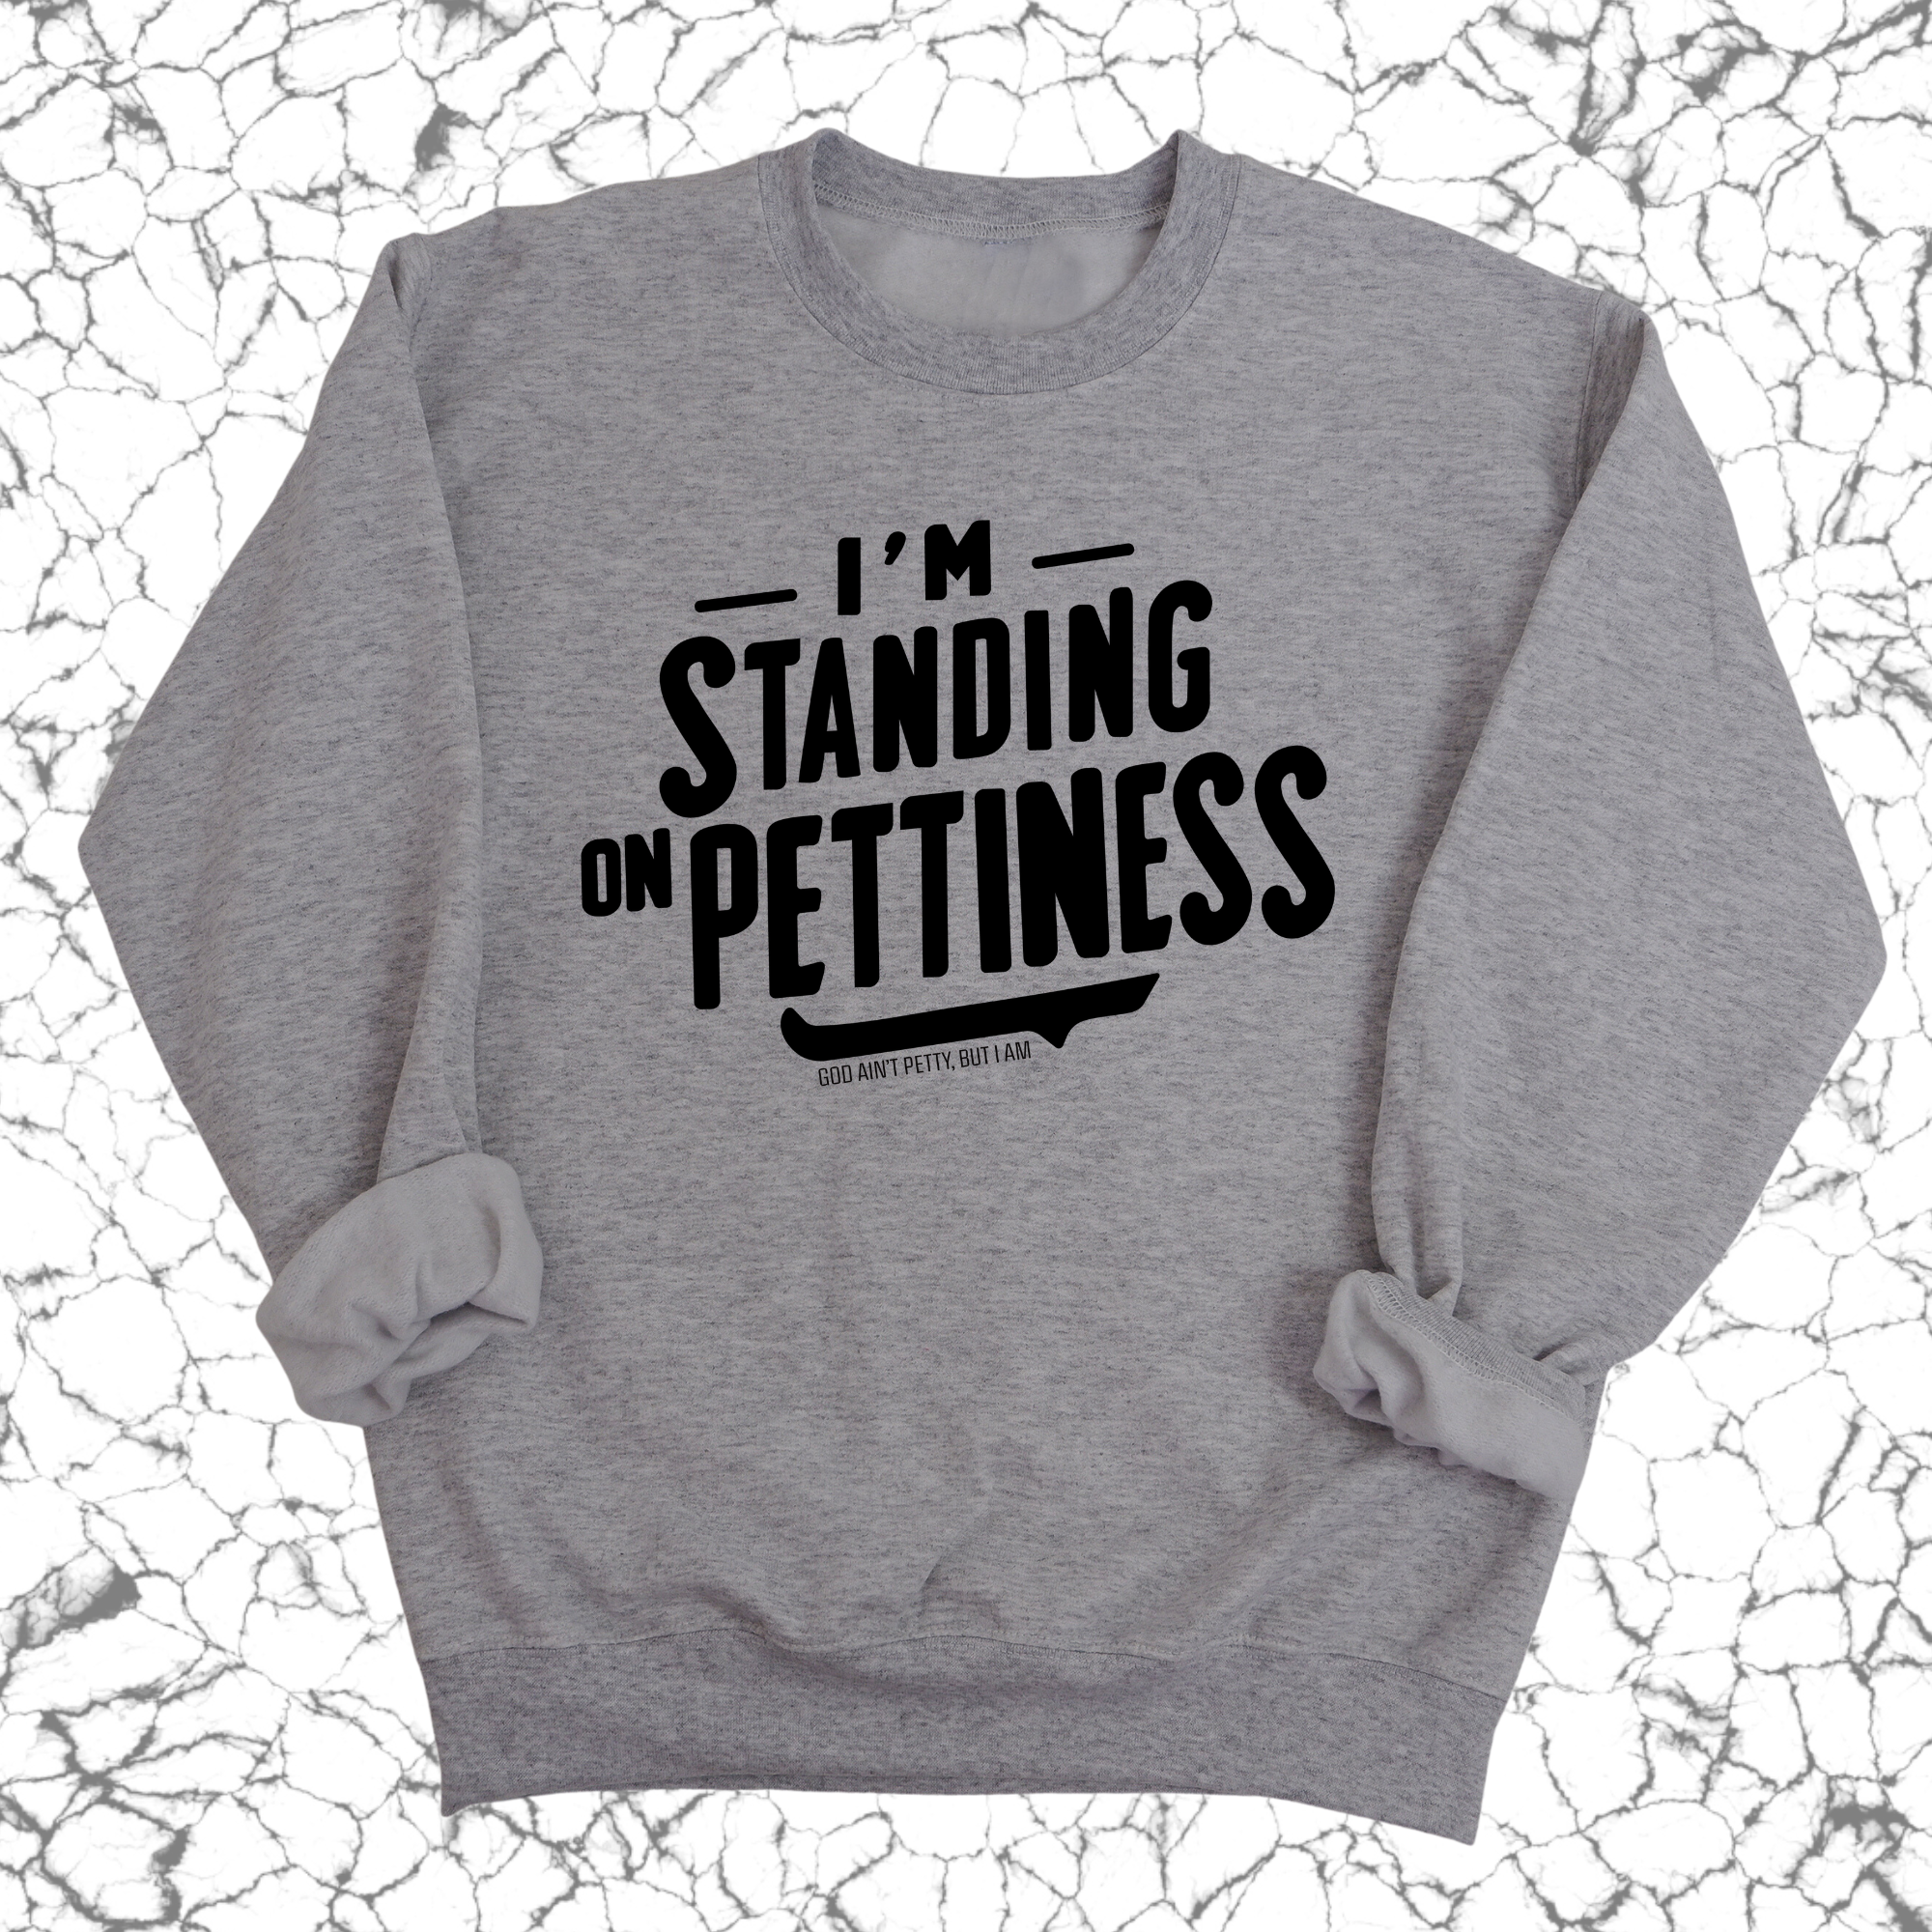 I'm Standing on Pettiness Unisex Sweatshirt-Sweatshirt-The Original God Ain't Petty But I Am